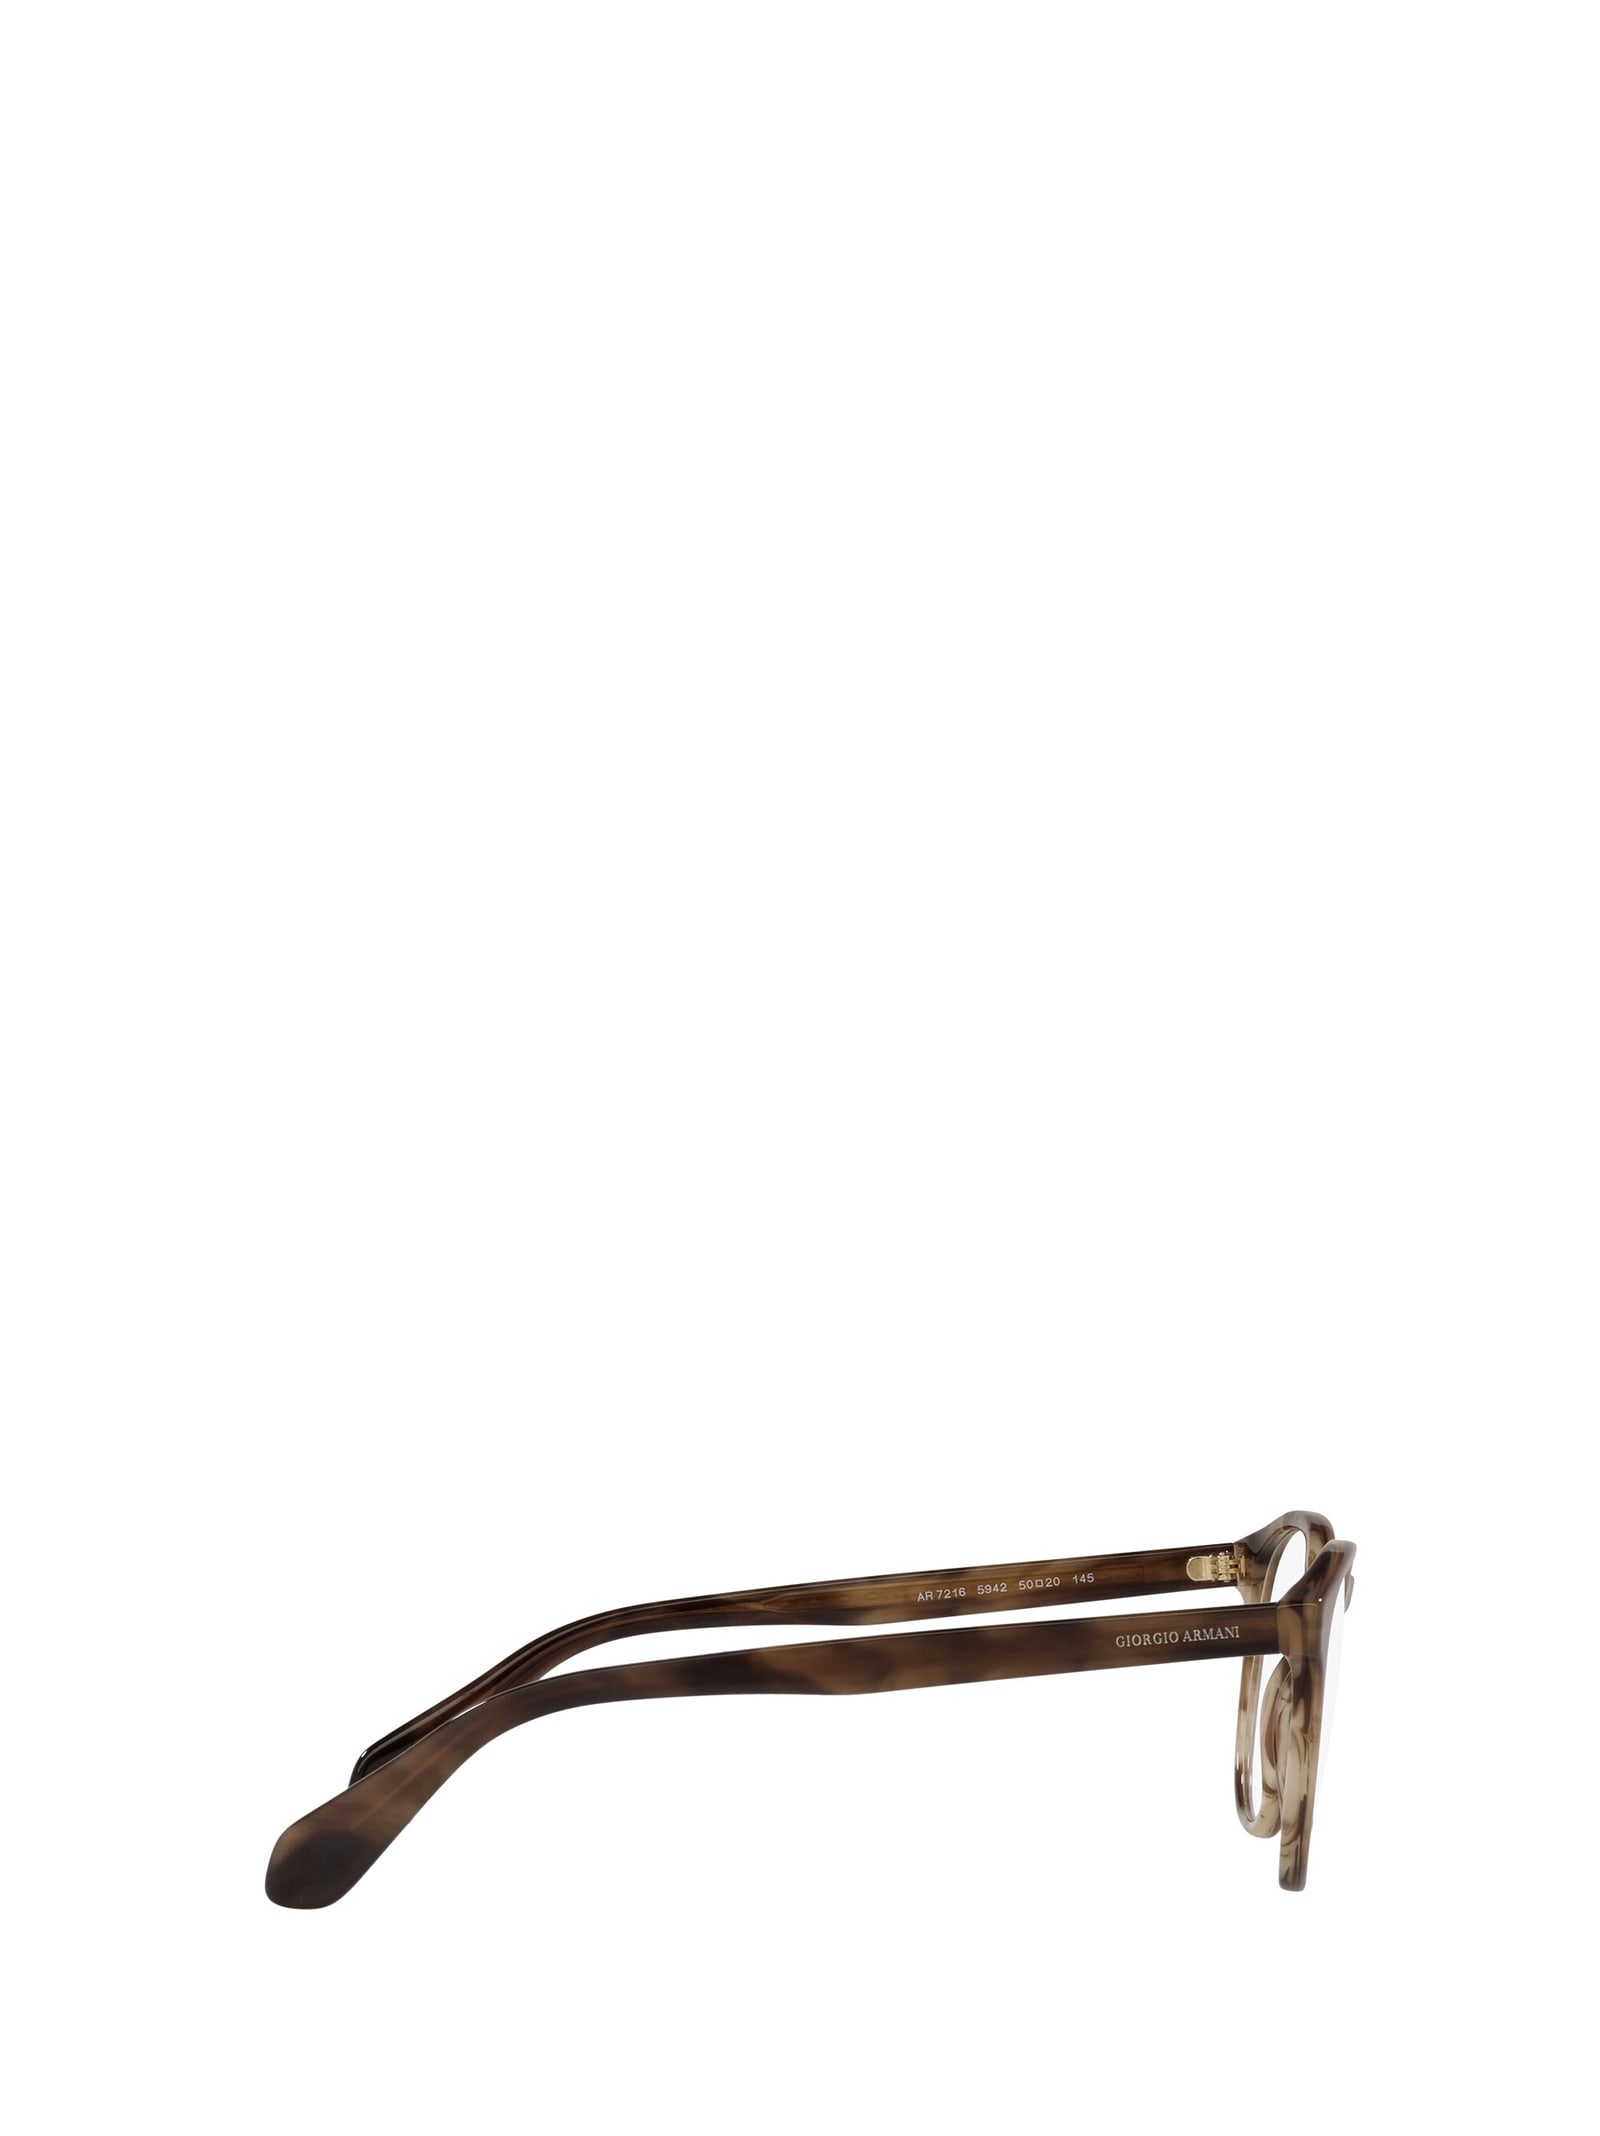 Giorgio Armani Opal Striped Brown Eyeglasses, ®